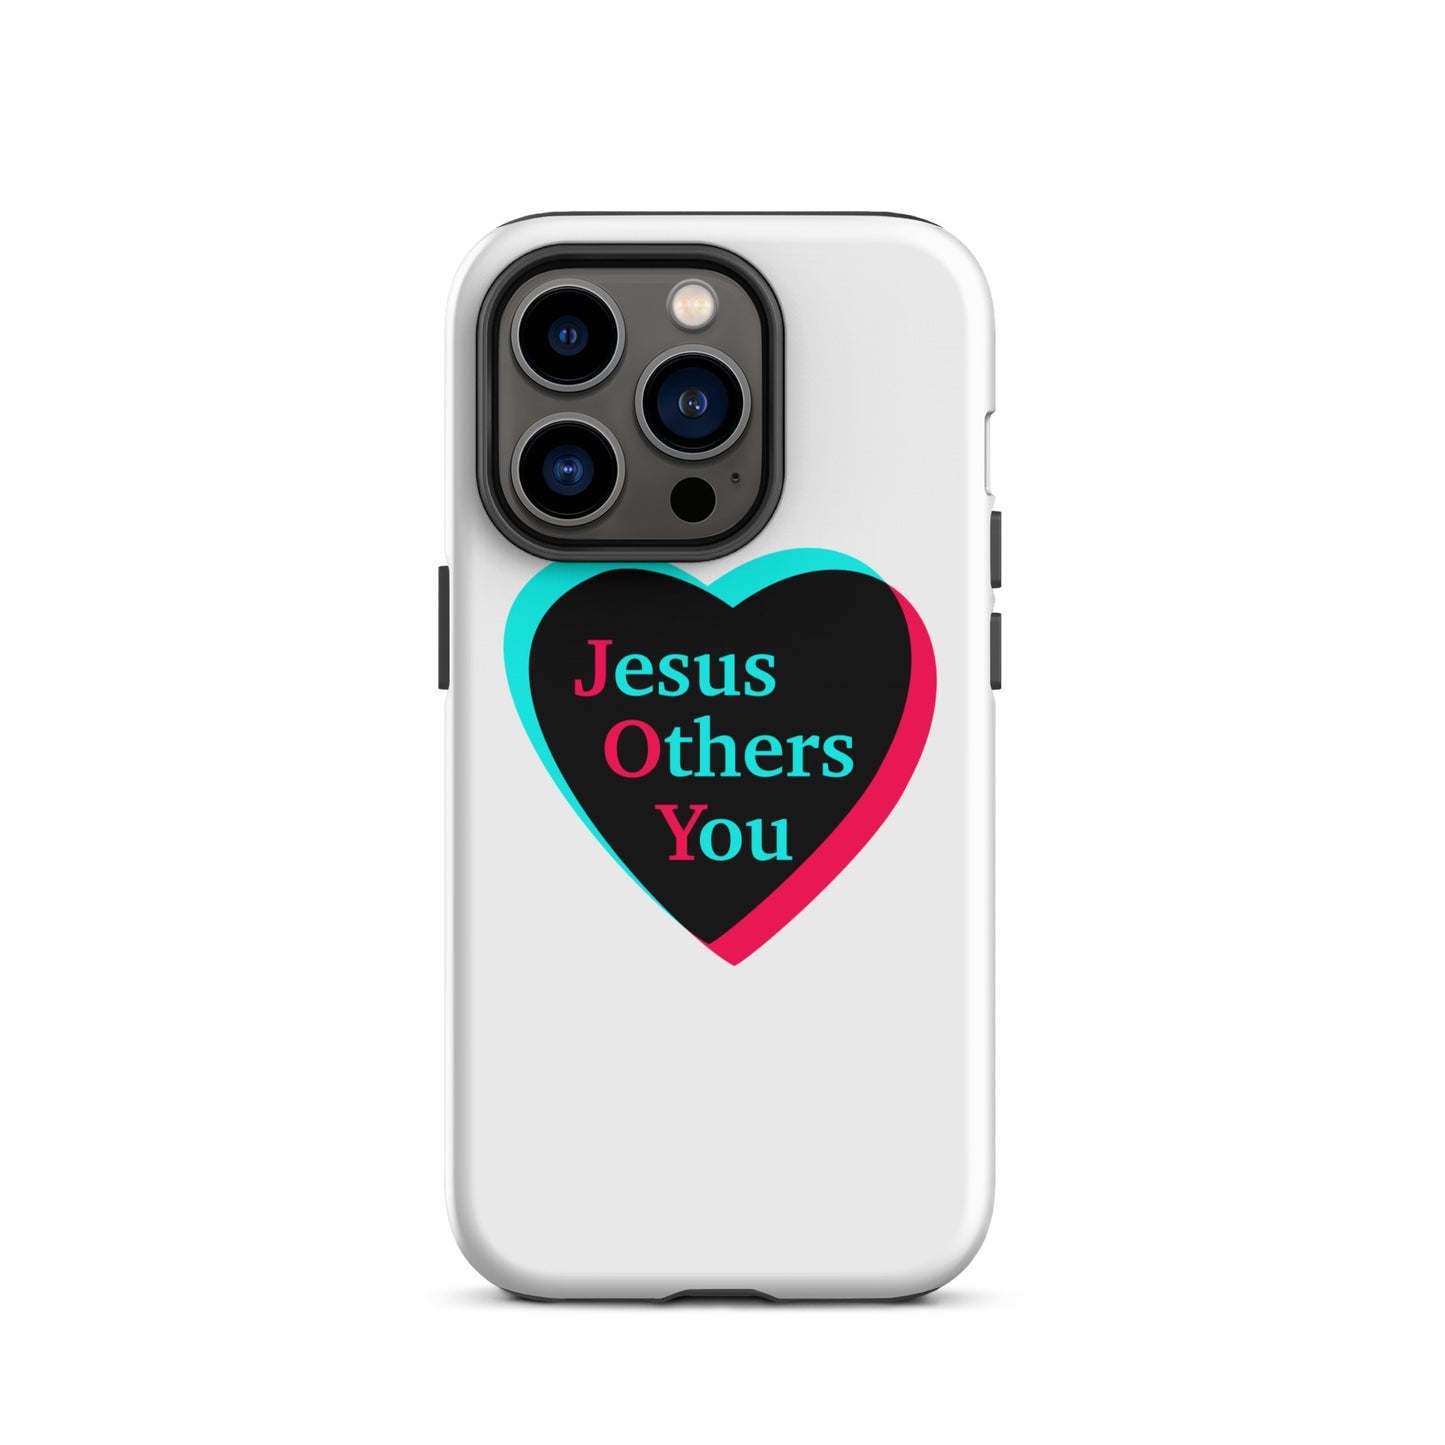 JOY = Jesus Others You - Tough iPhone case for iPhone 11 Pro Max & Mini, 12 Pro Max & Mini, 13 Pro Max & Mini, 14 Pro Max & Mini